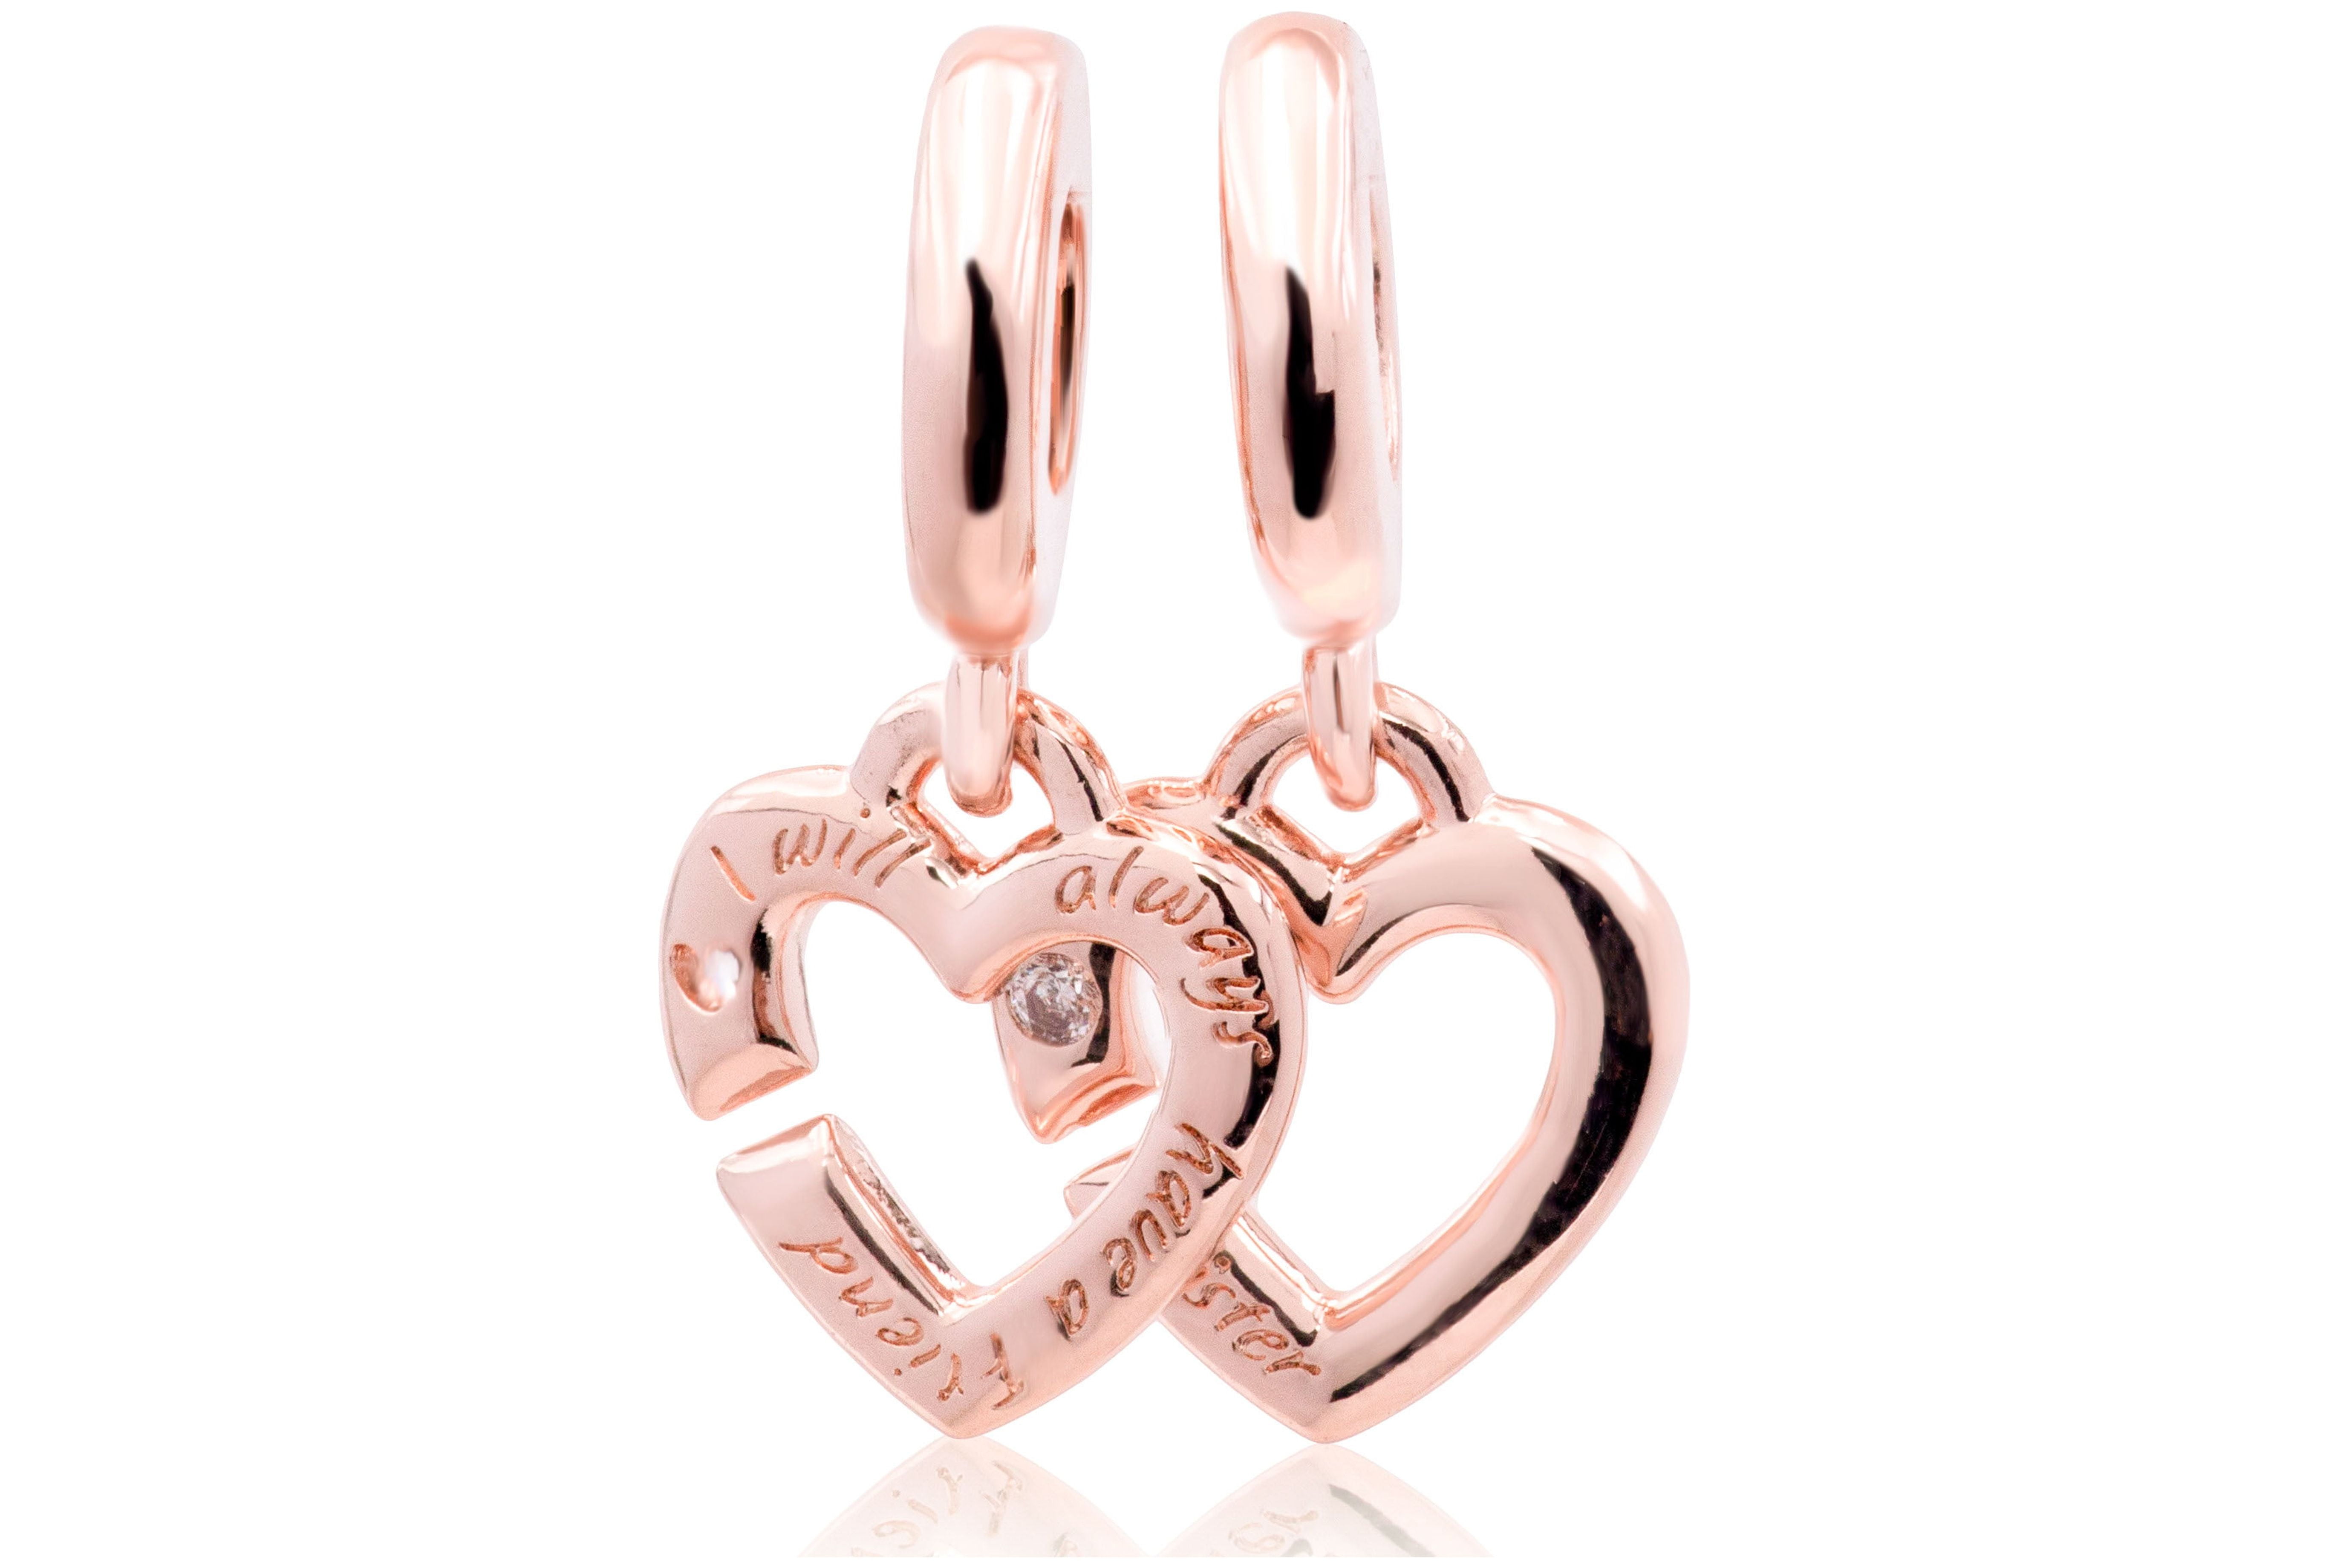  Pandora Entwined Infinite Hearts Charm Bracelet Charm